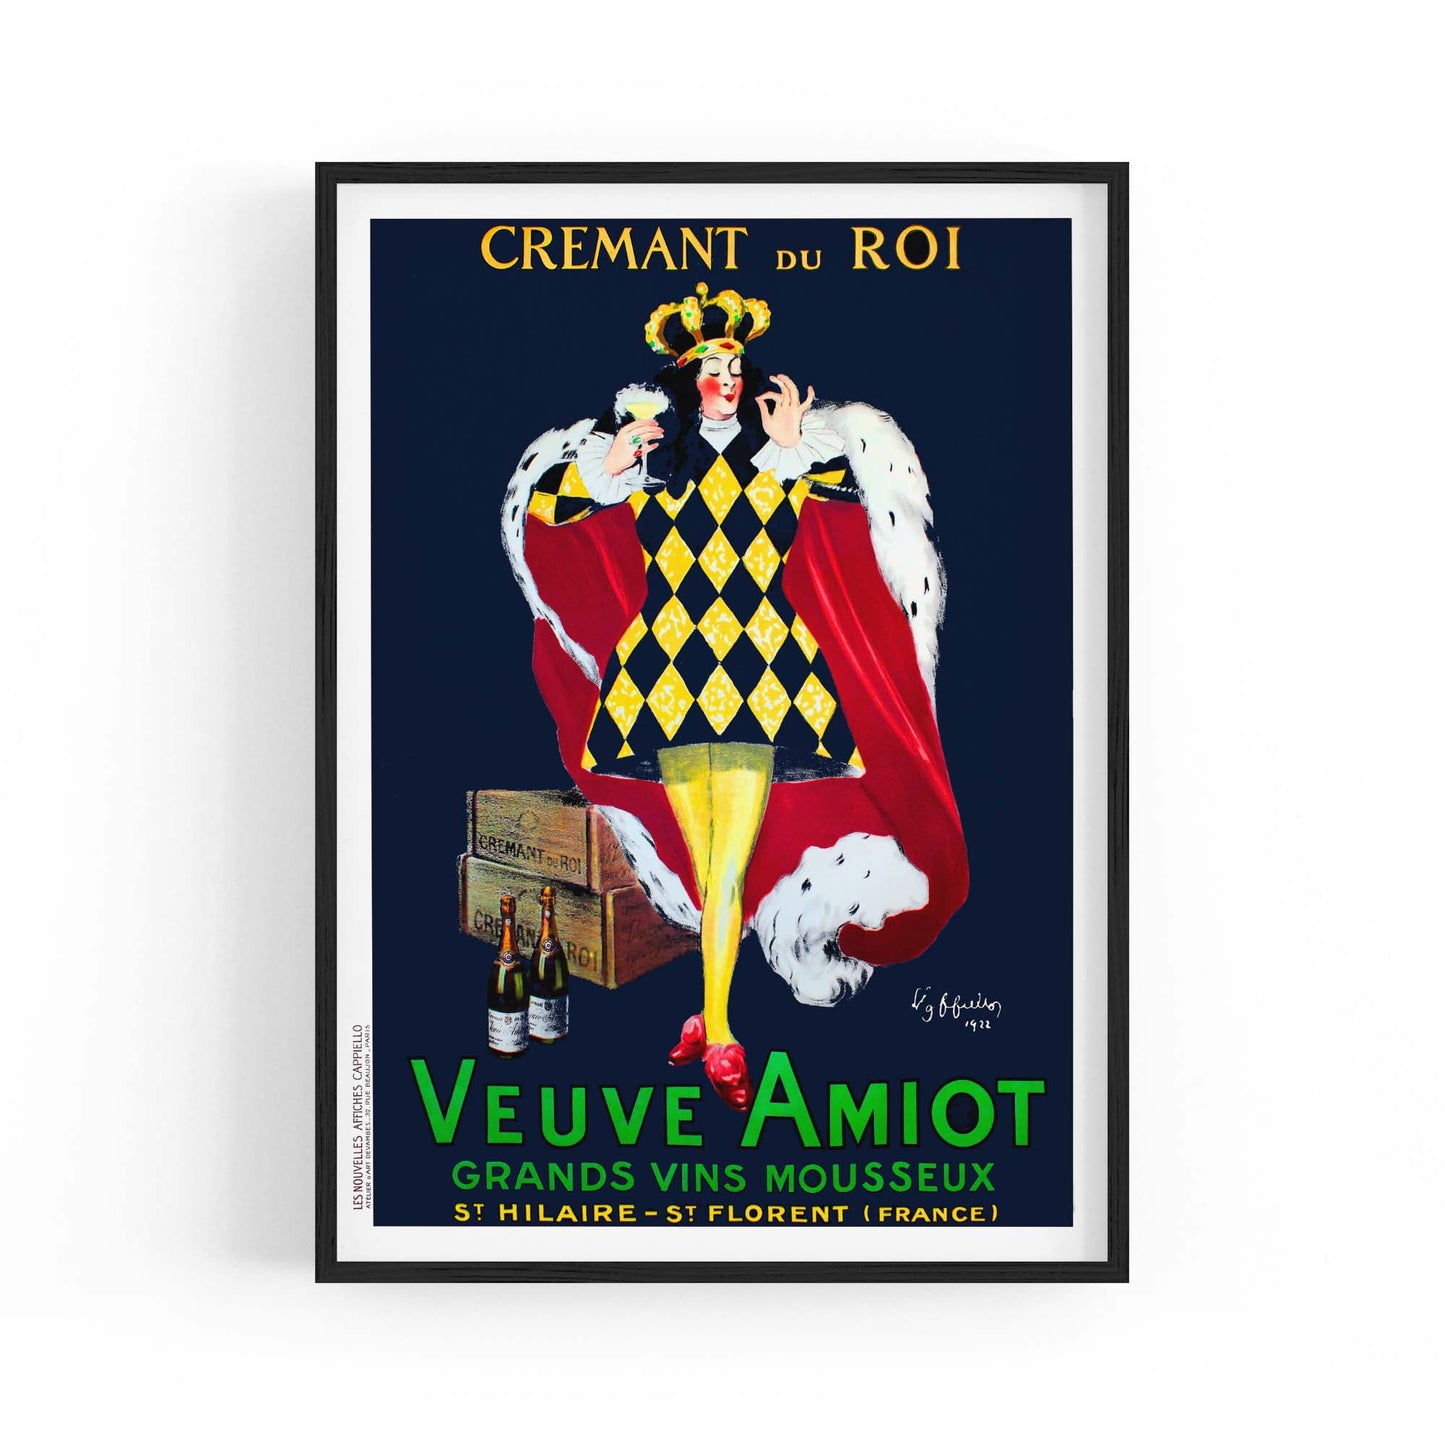 Cremant du Roi Veuve Amiot Vintage Drinks Advert Wall Art - The Affordable Art Company